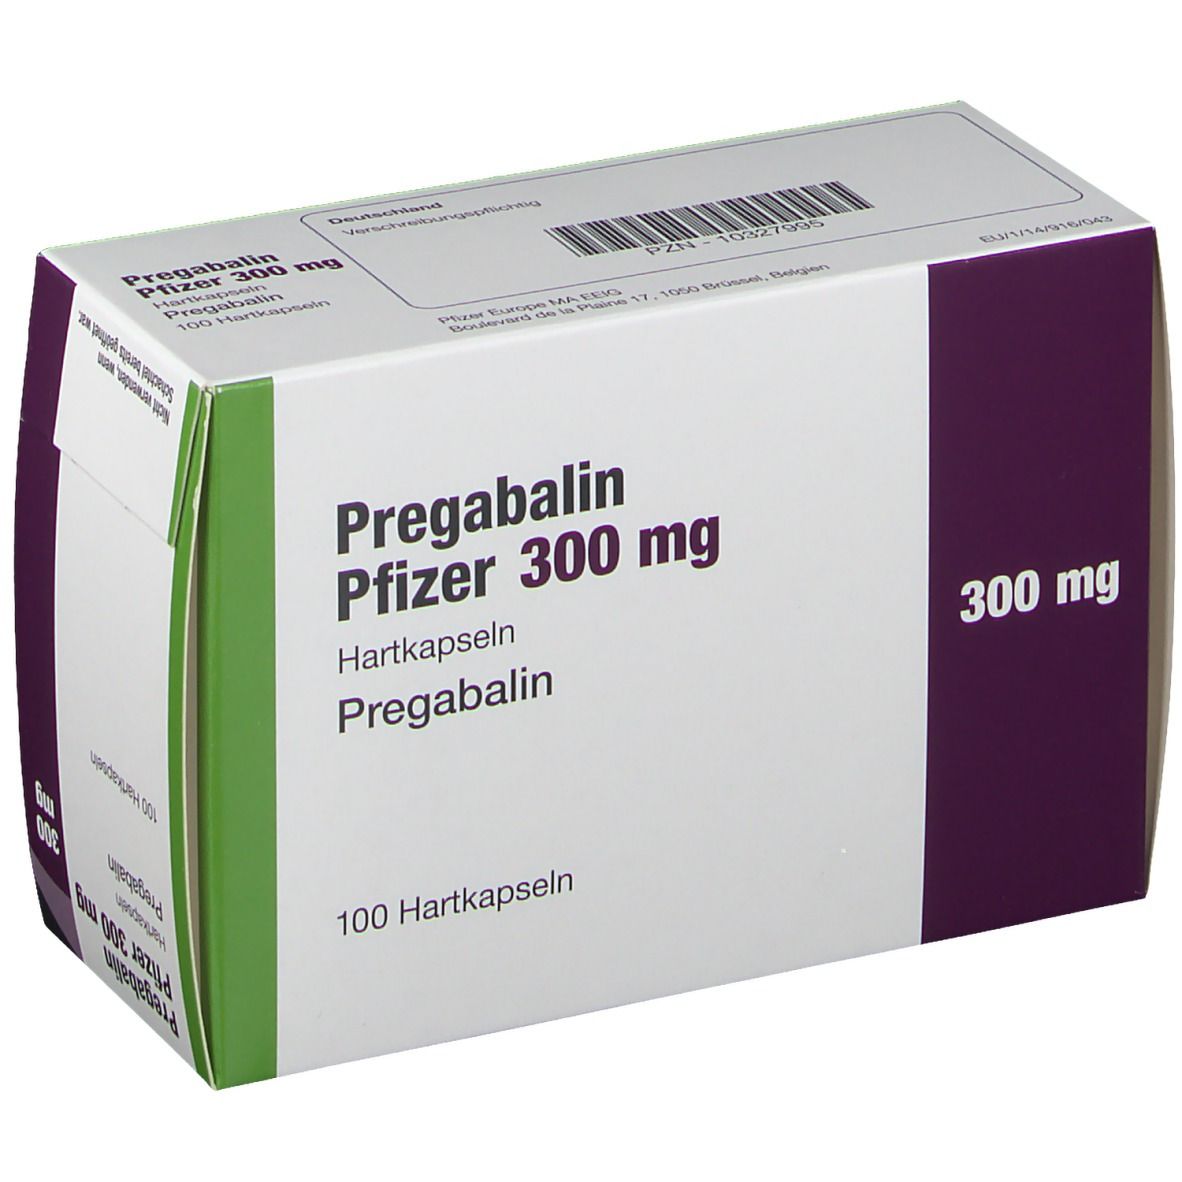 Pregabalin Pfizer 300 mg